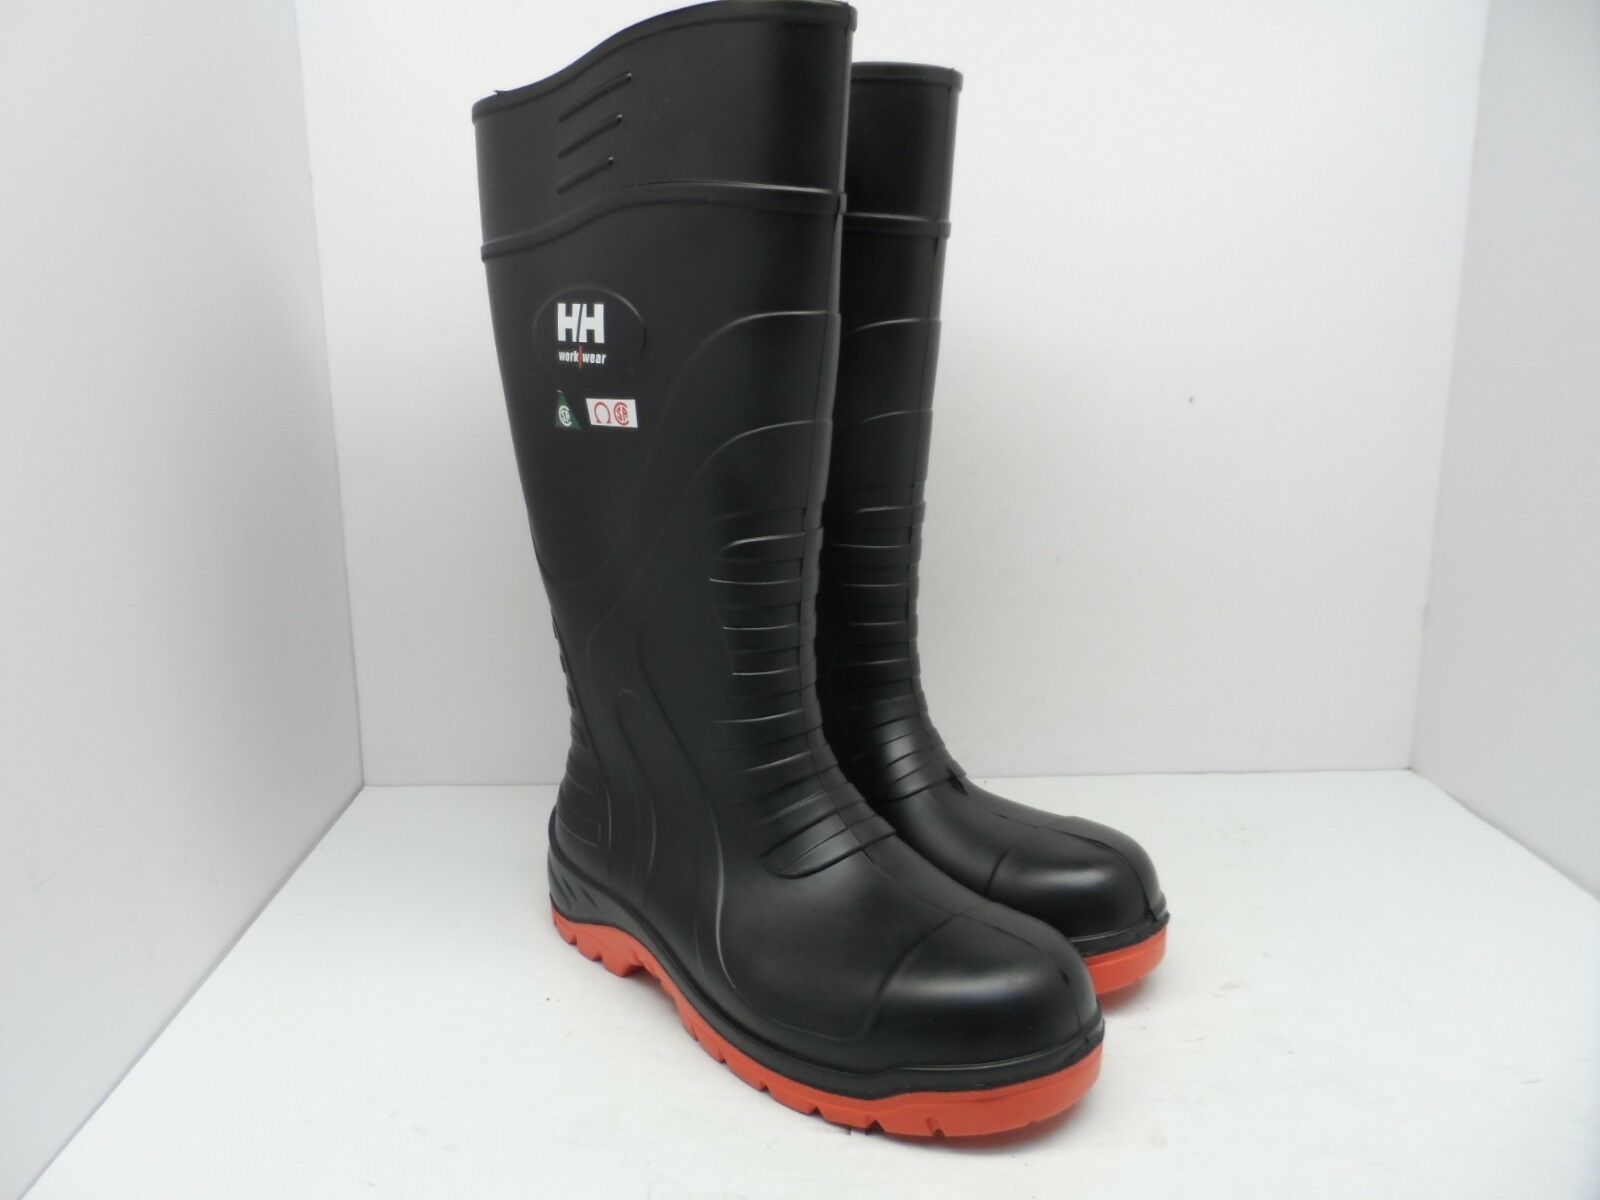 Primary image for Helly Hansen Workwear Men's Pull-On STSP PU Rain Boots Black/Orange Size 7M